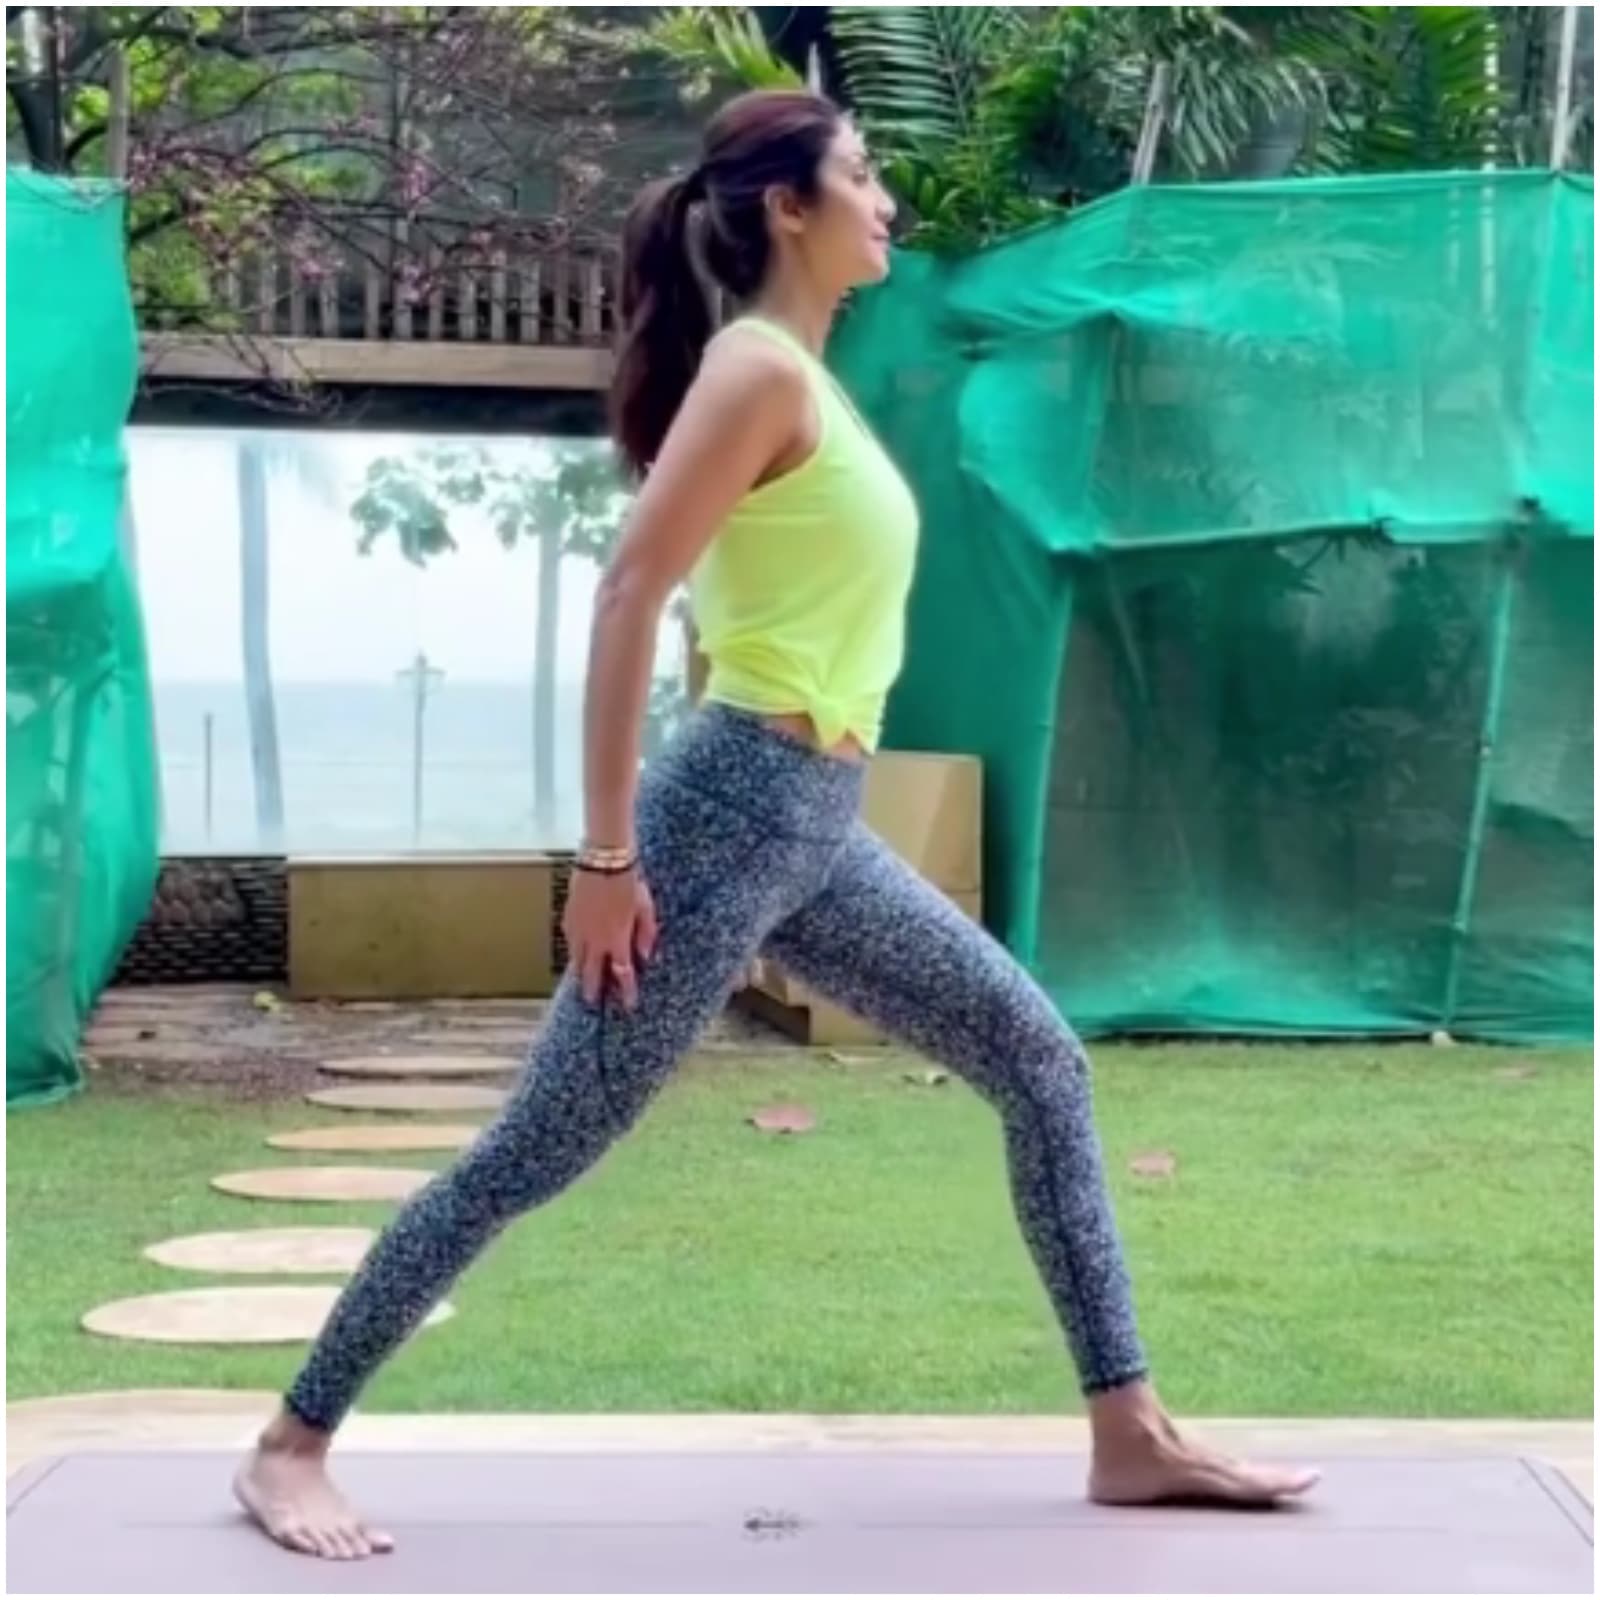 Shilpa Shetty Sexe Vides - Watch: Shilpa Shetty Shares Yoga Video with Empowering Message